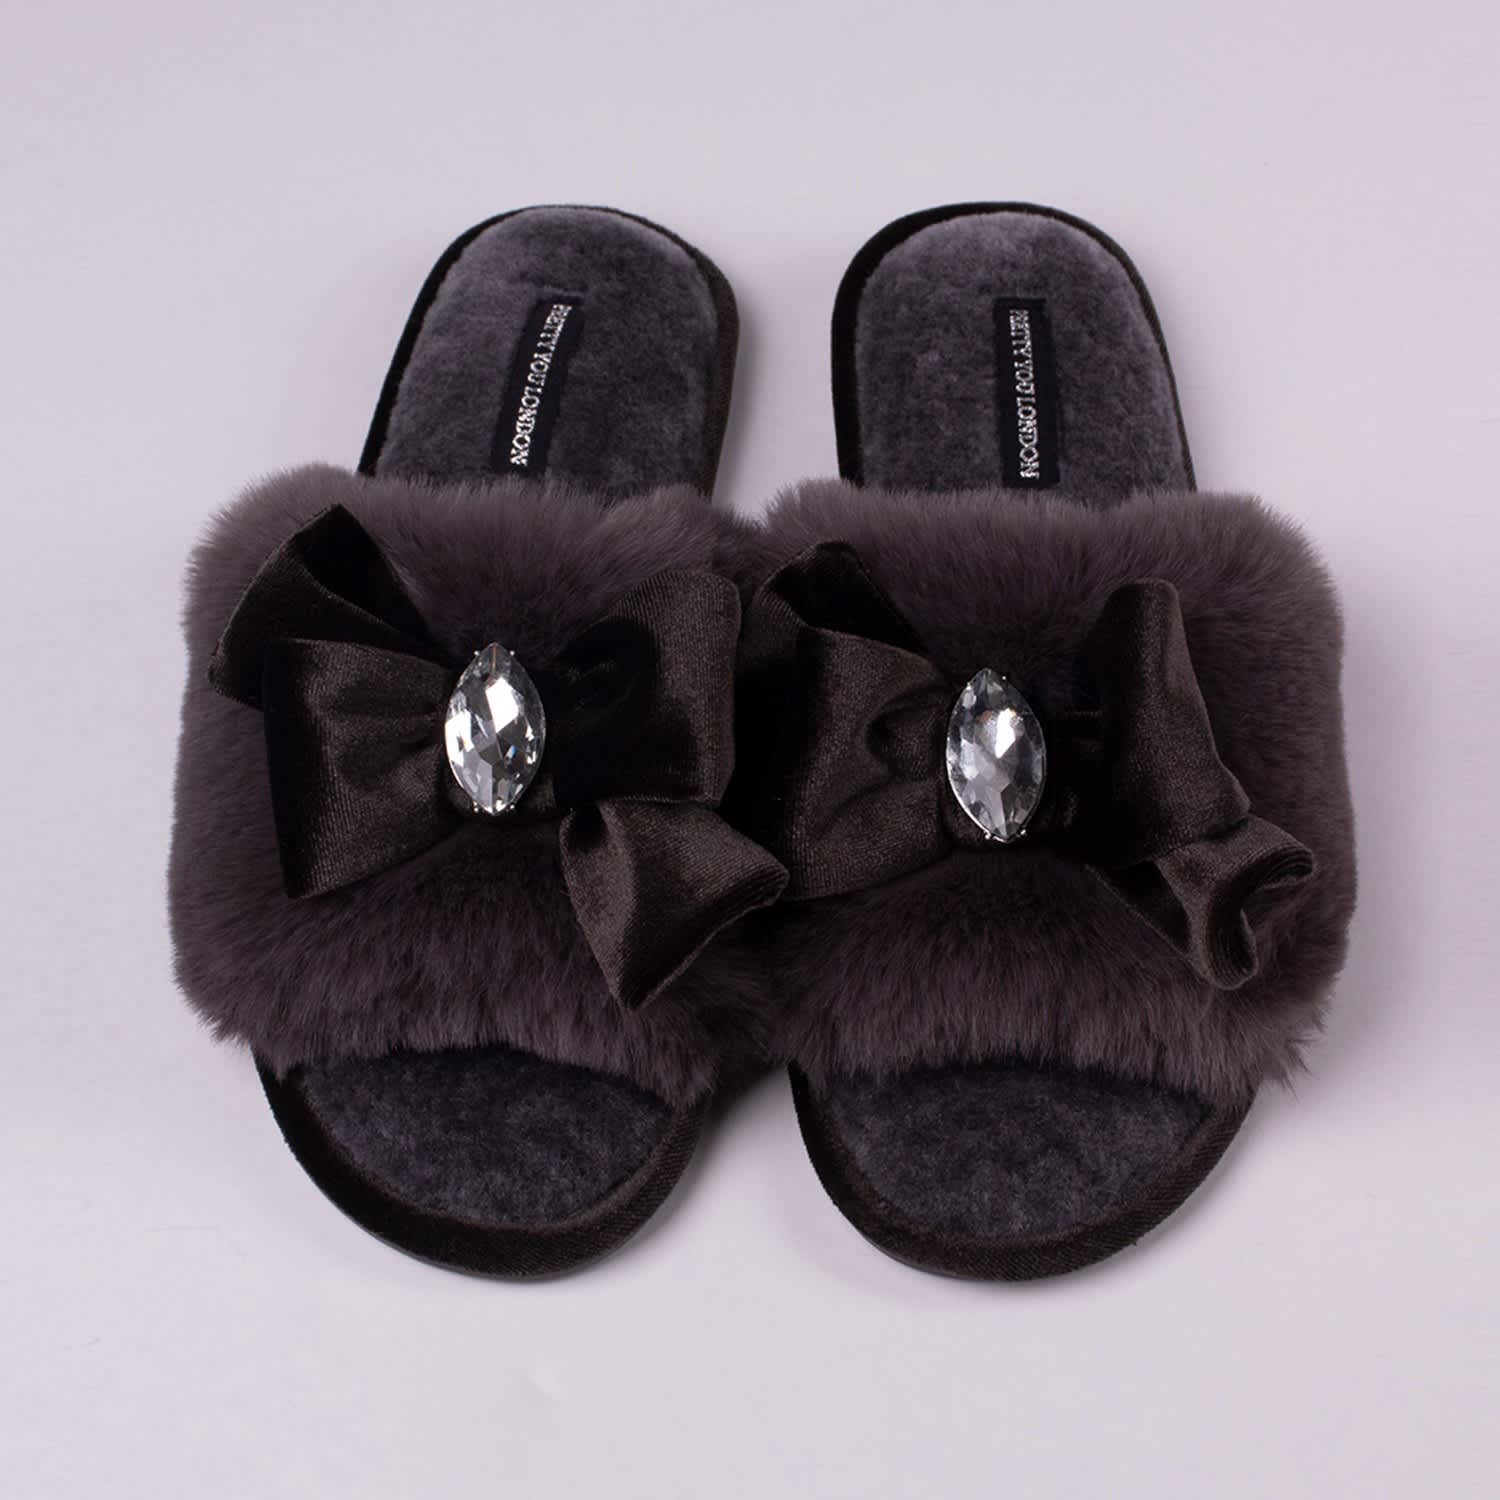 jewel house slippers